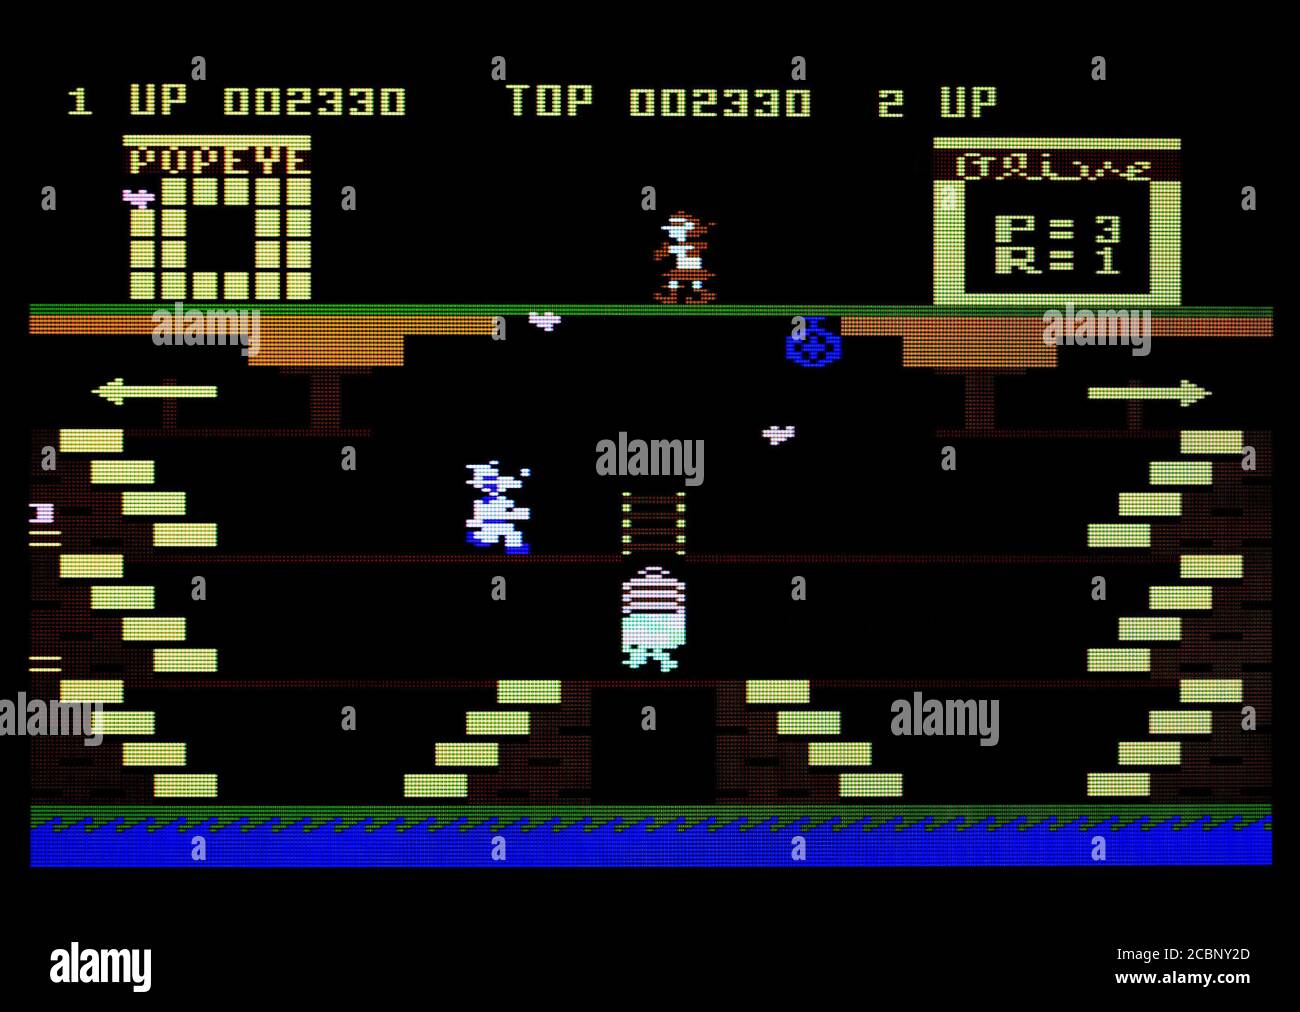 Popeye - Atari 5200 - editorial use only Stock Photo